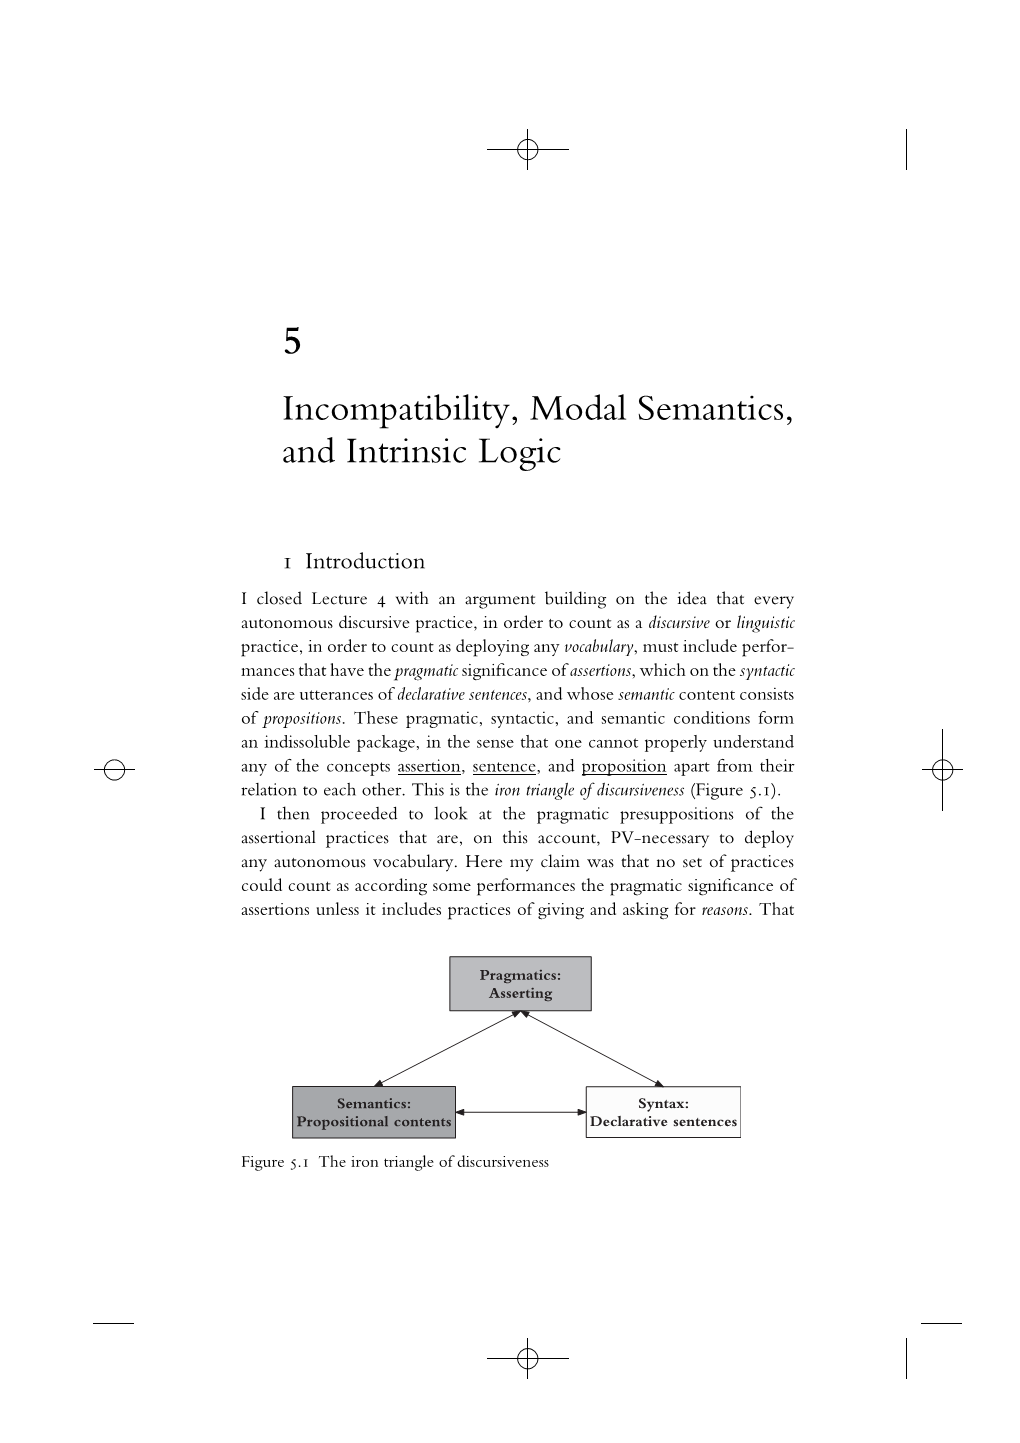 Incompatibility, Modal Semantics, and Intrinsic Logic